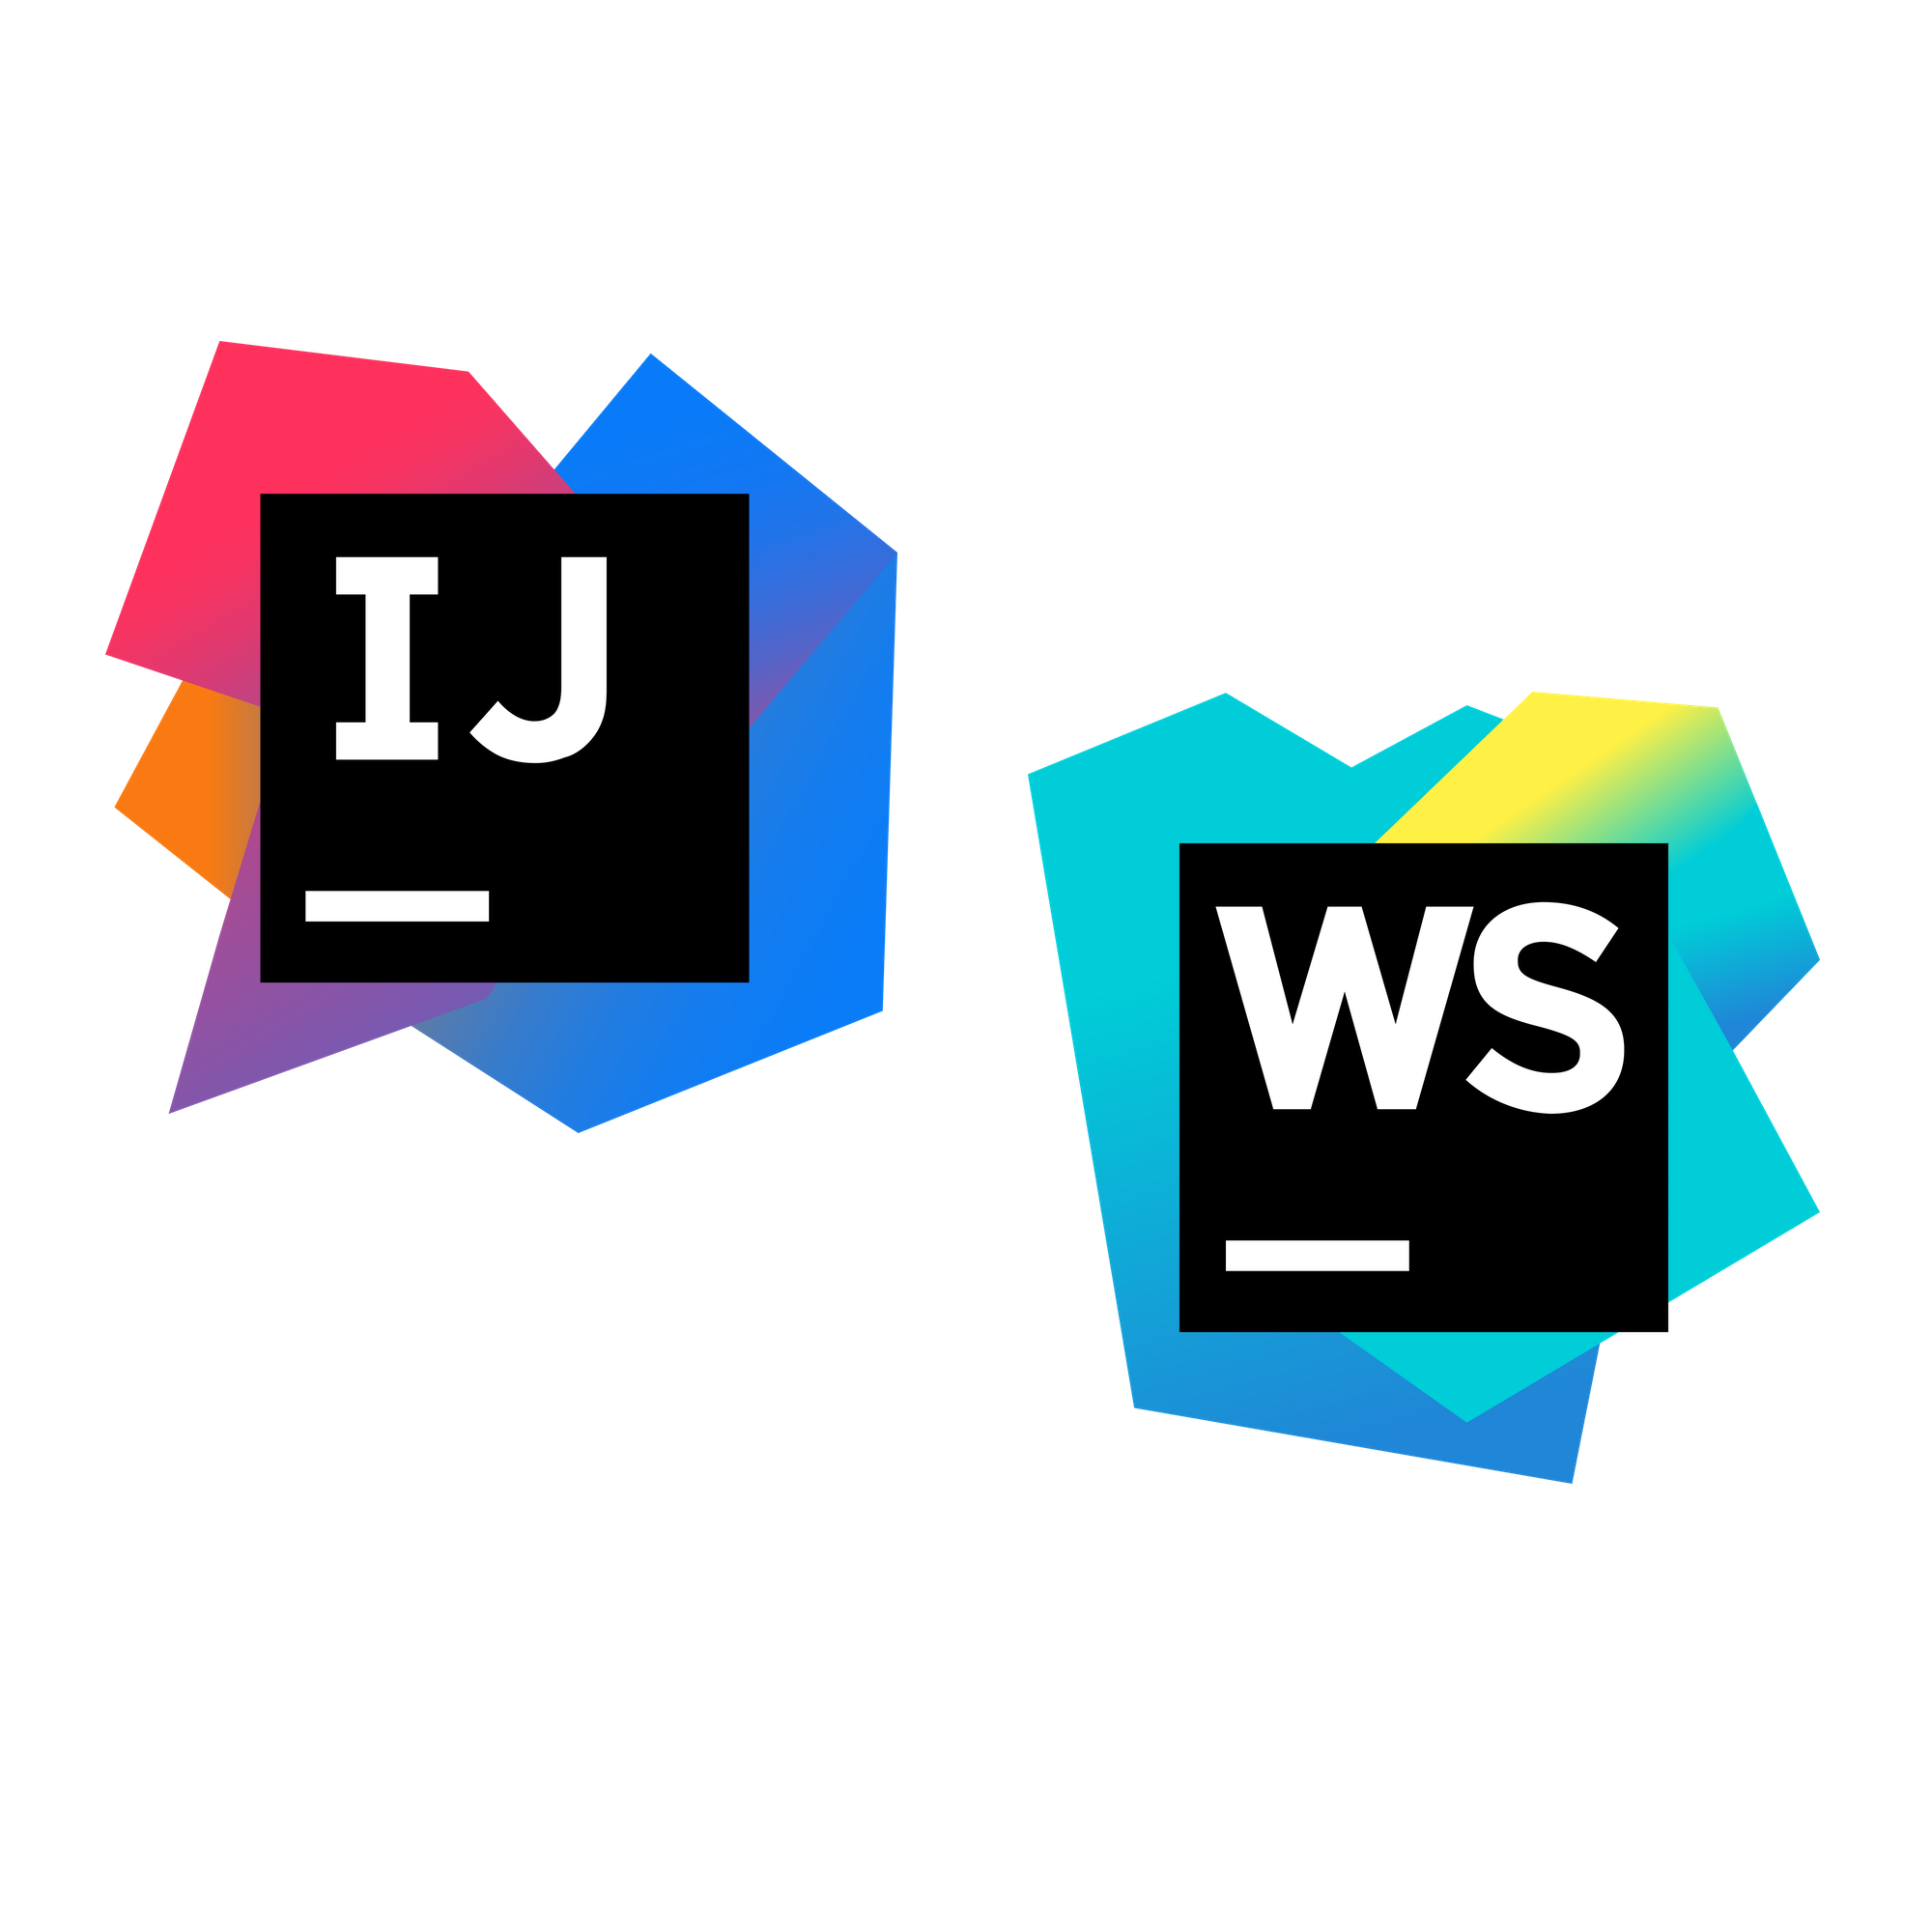 IntelliJ and Webstorm logos